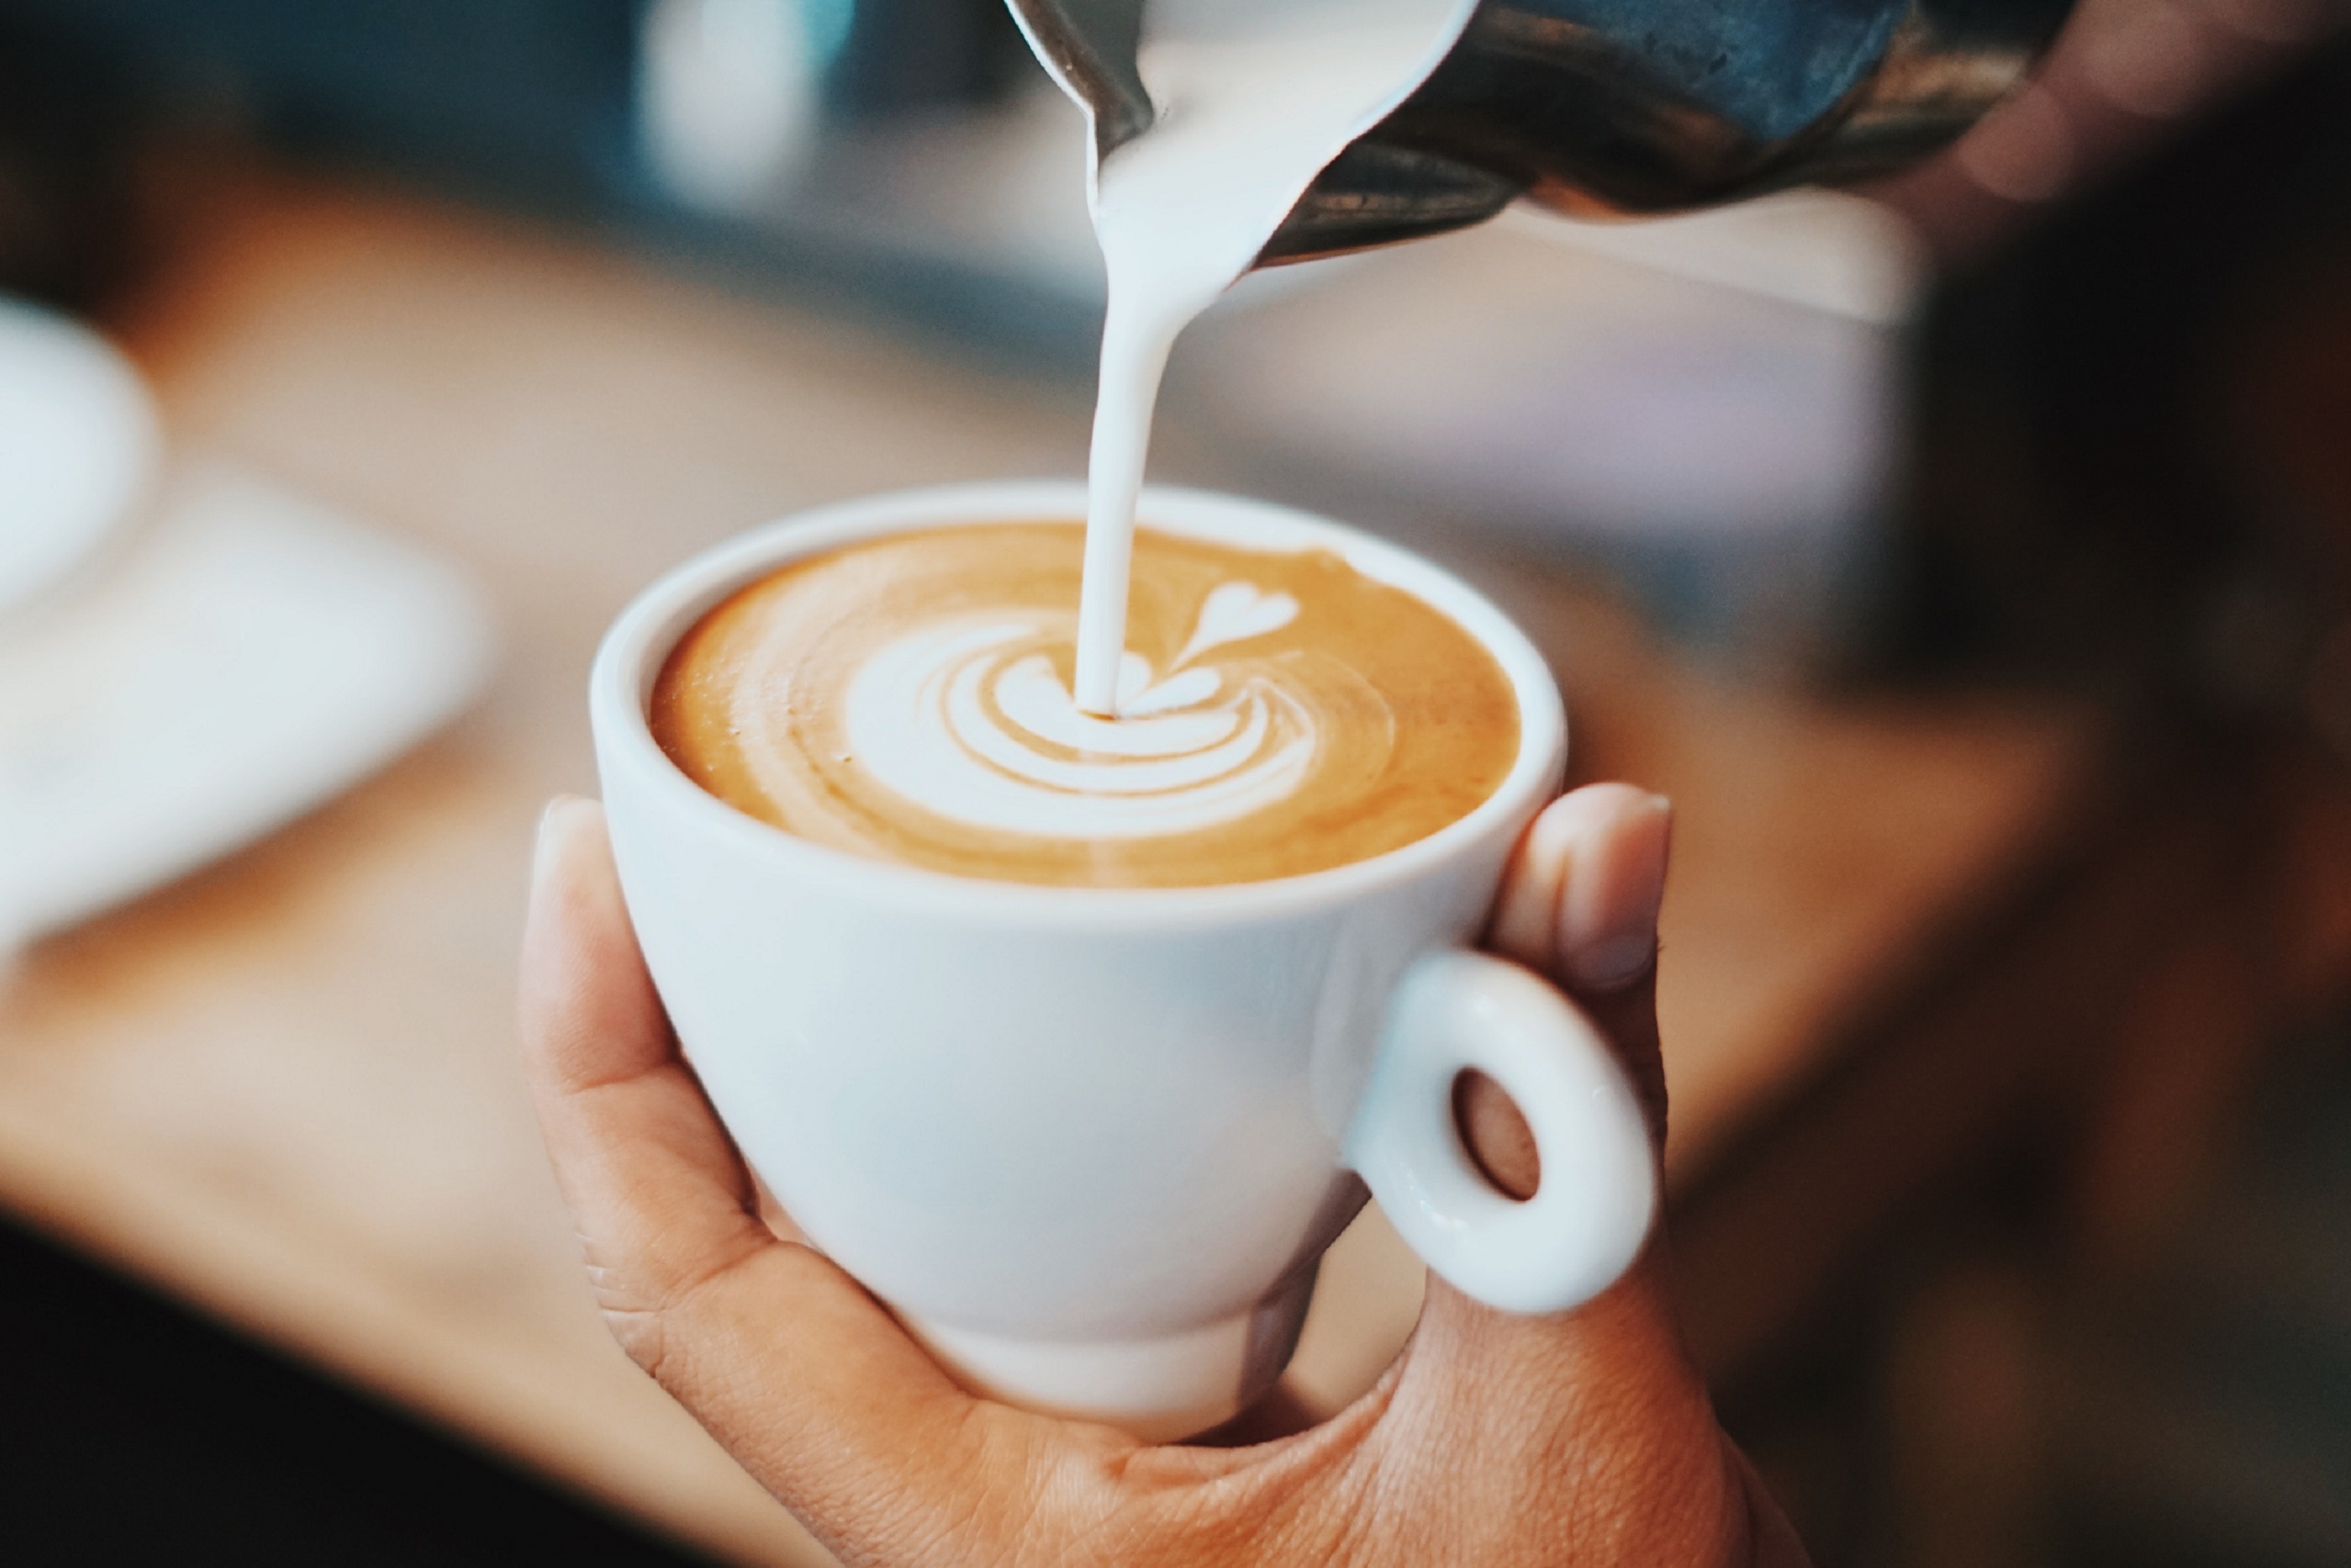 A person pours milk into coffee in a white mug